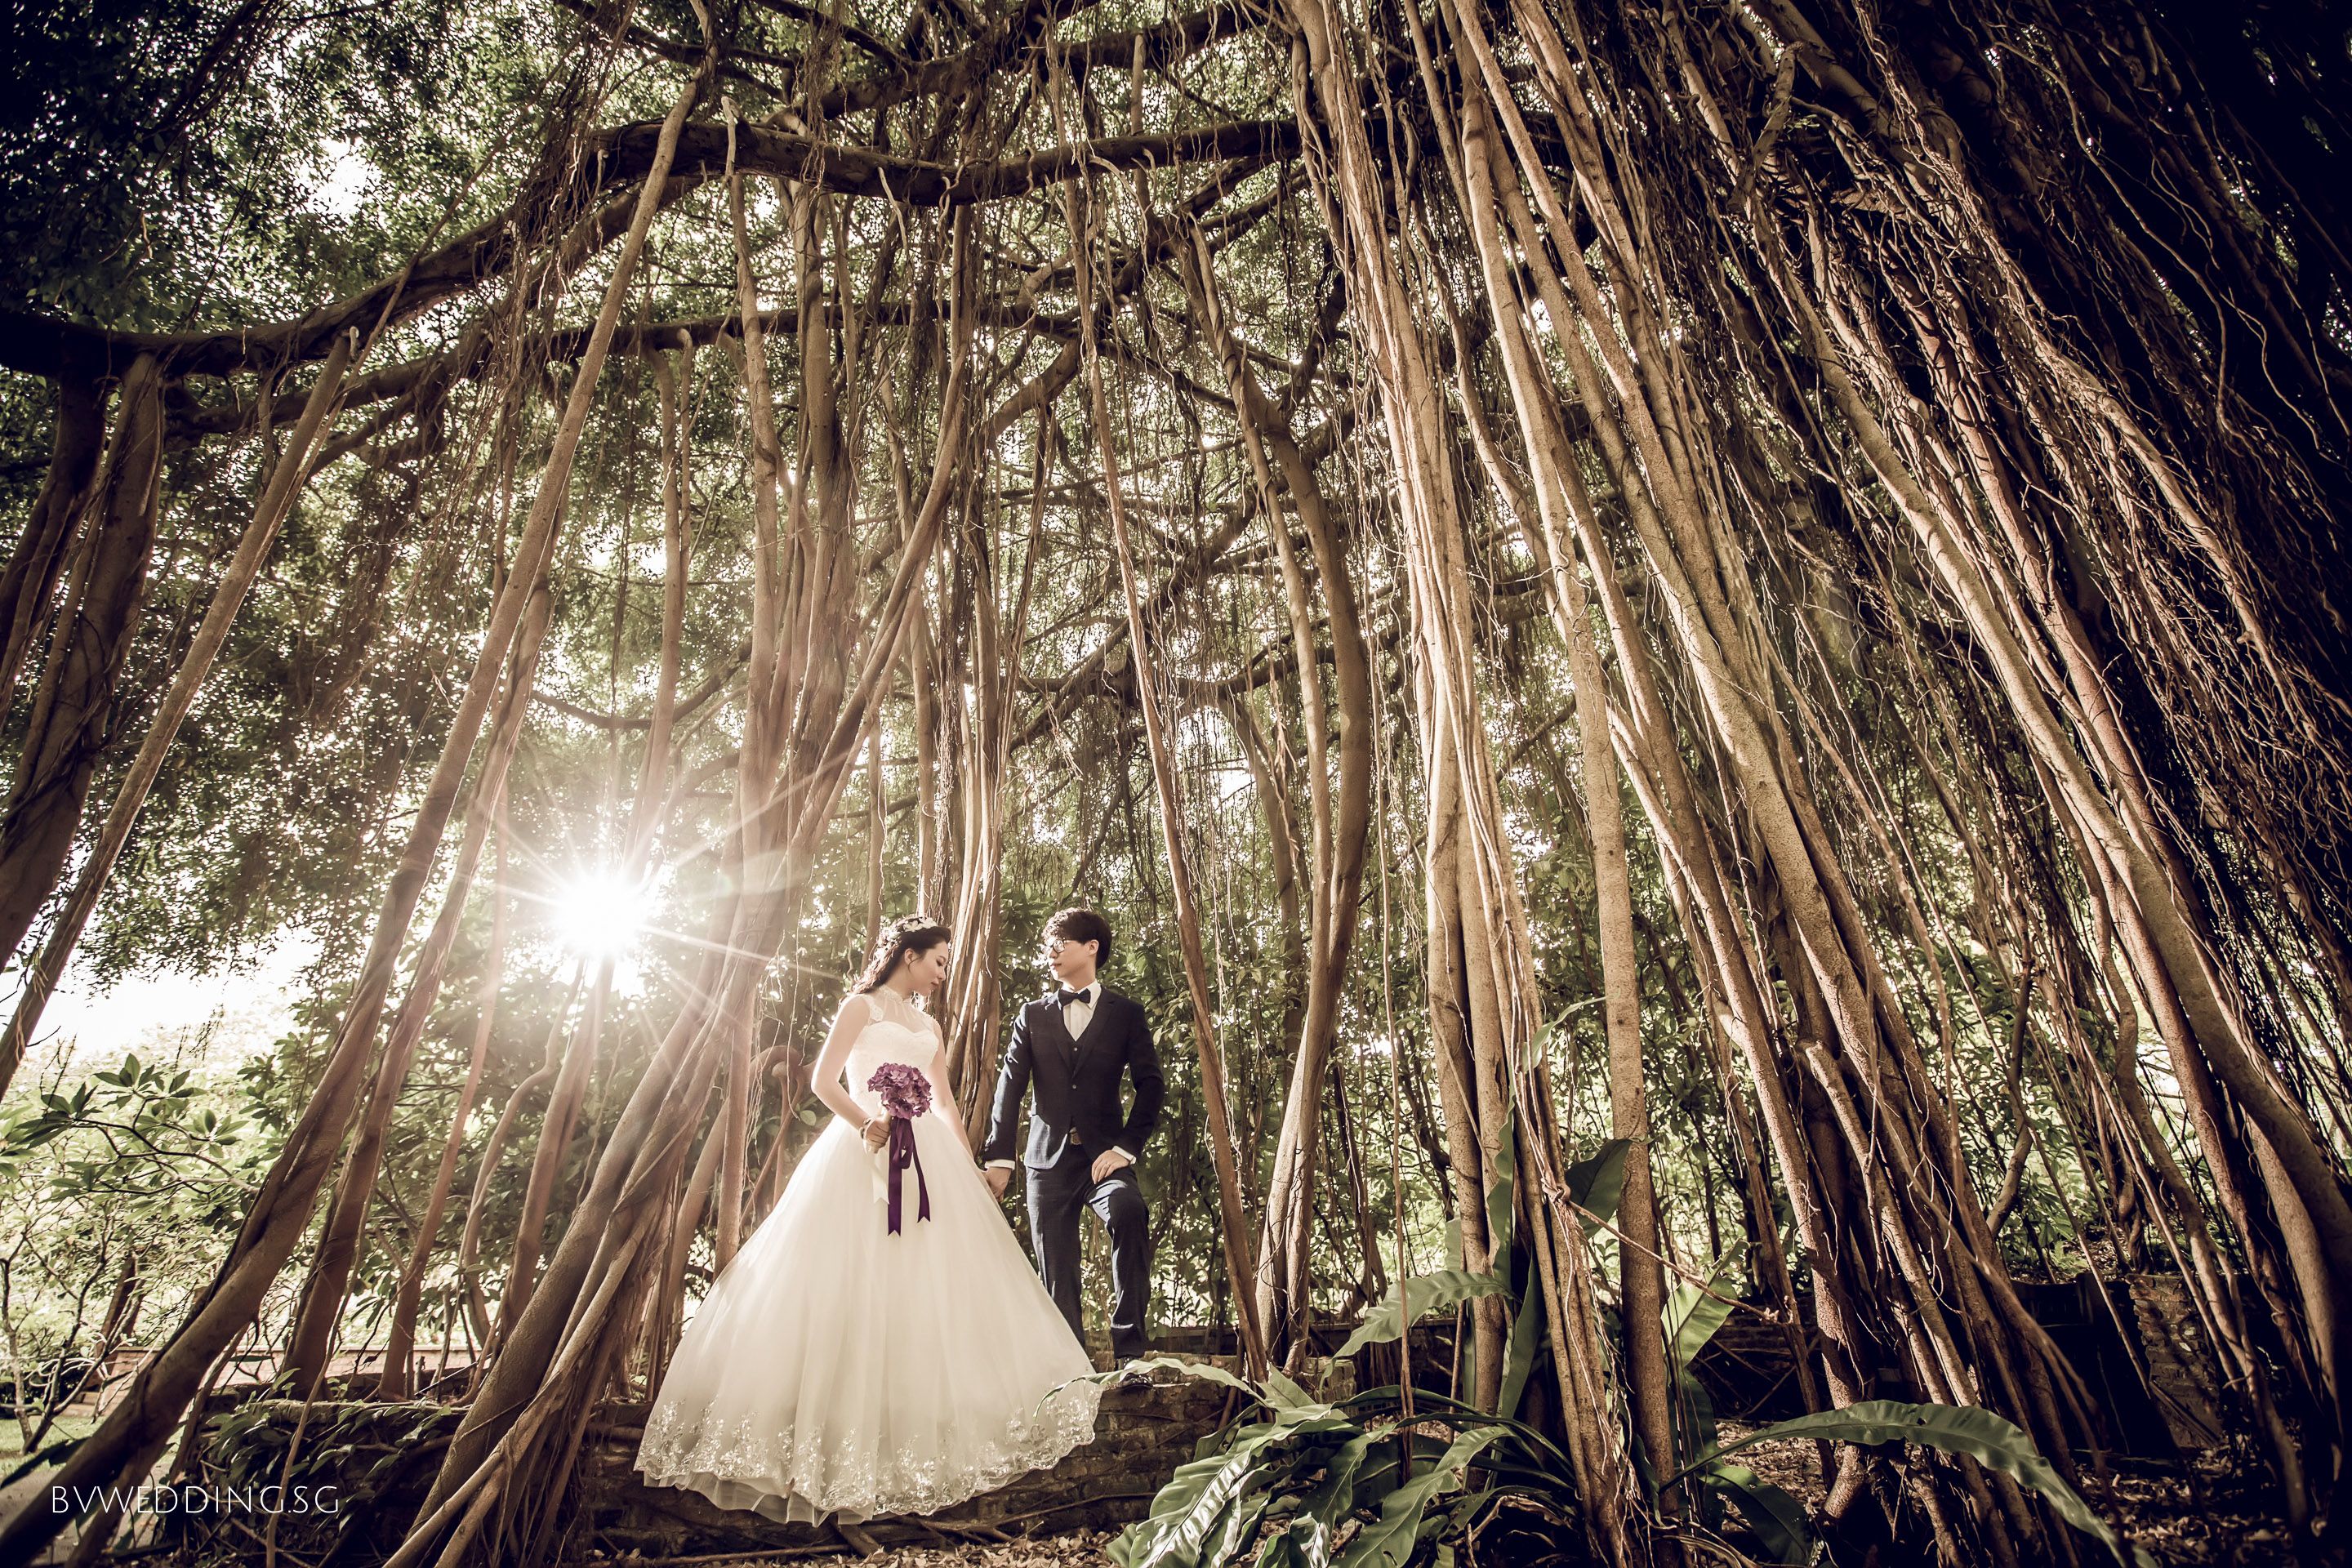 Pre Wedding Photoshoot At Botanical Garden In Singapore Pre